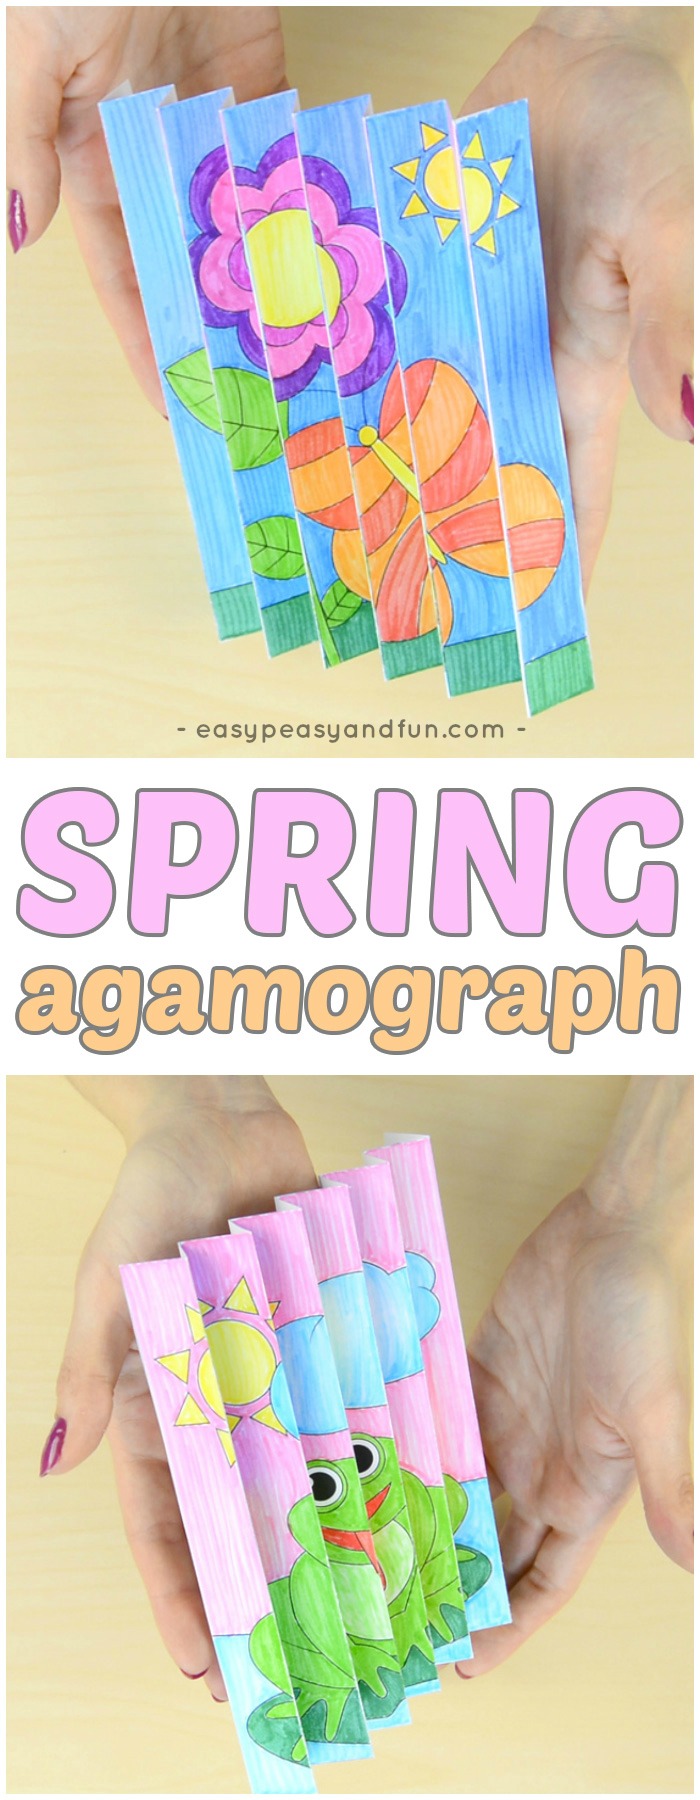 Printable Children's Spring Agamograph Template Craft #springcrafts #papercrafts #craftsforkids